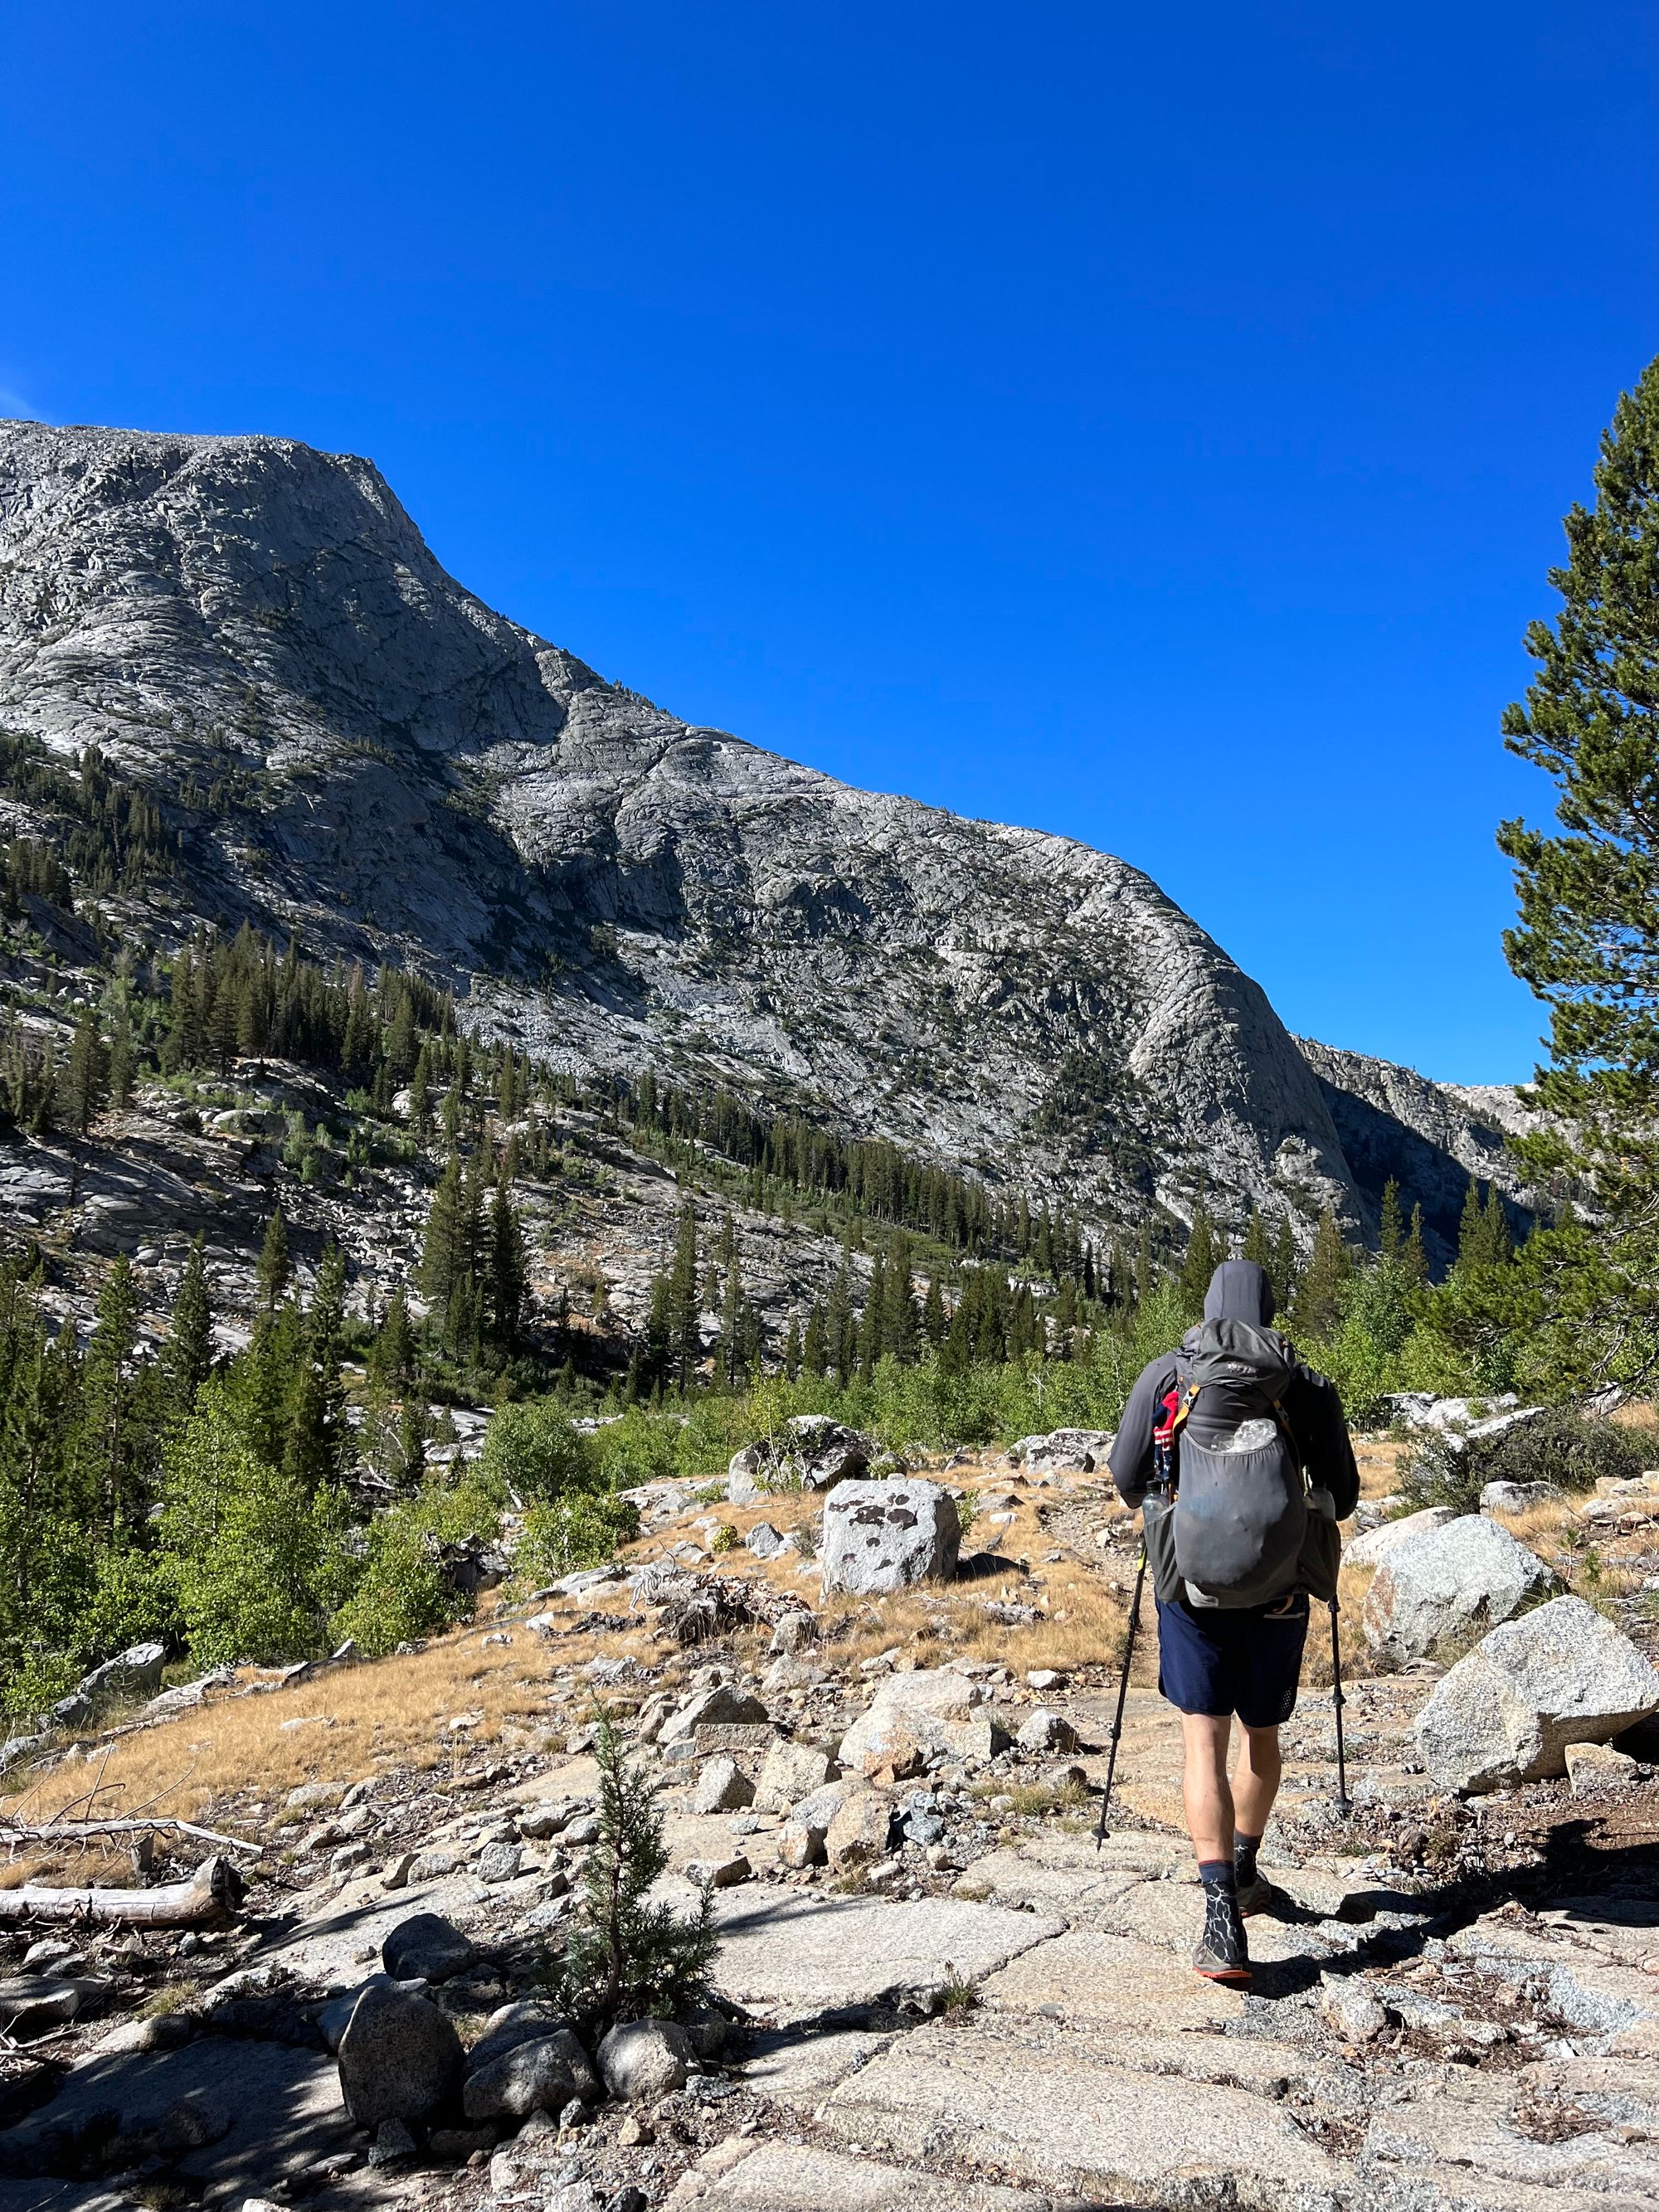 A backpacker walking along a trail through a mountain valley.